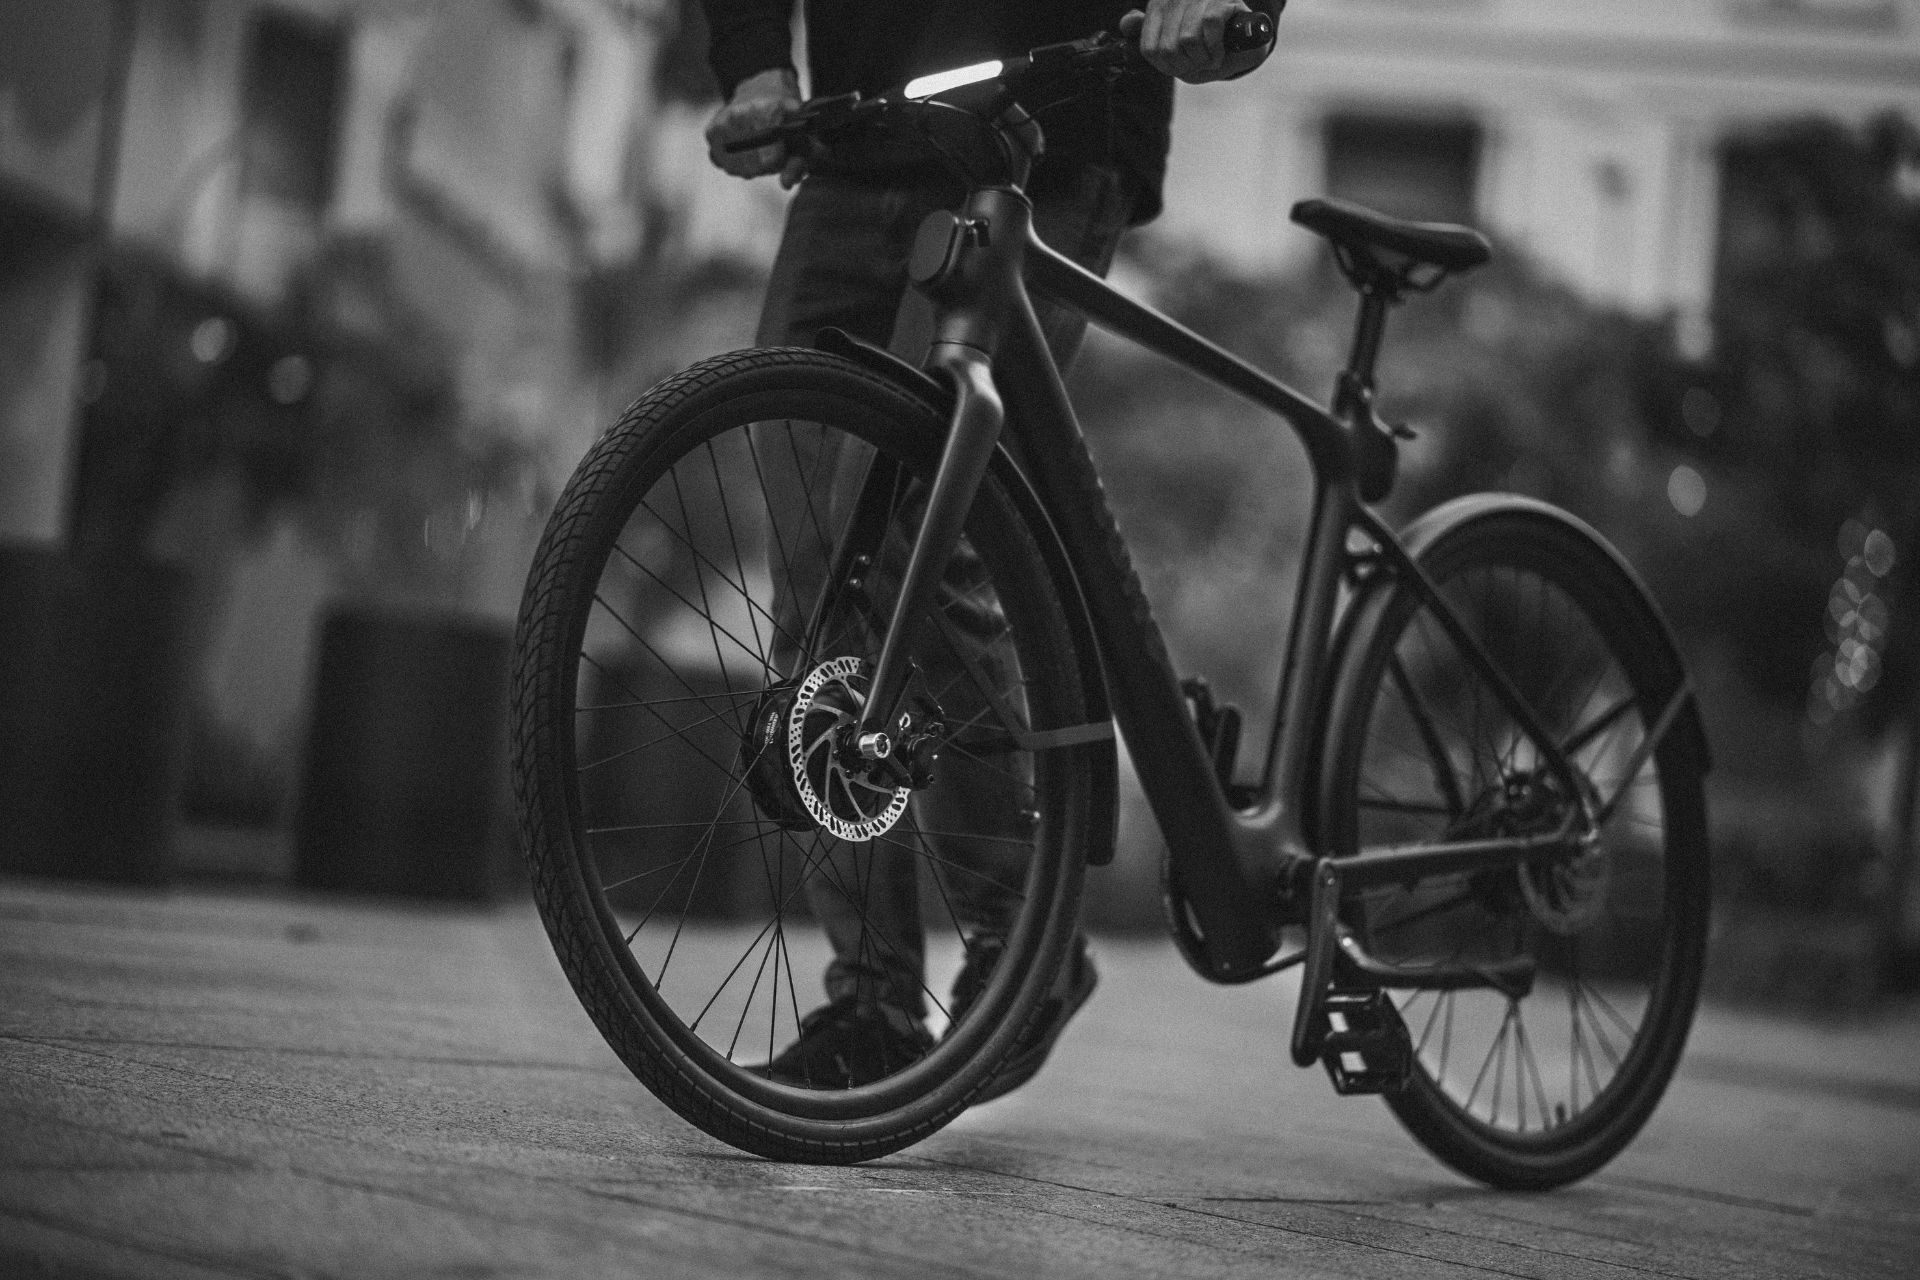 Modmo Saigon+ Electric Bicycle - RRP £2800 - Size M (Rider: 155-175cm) - Image 10 of 19